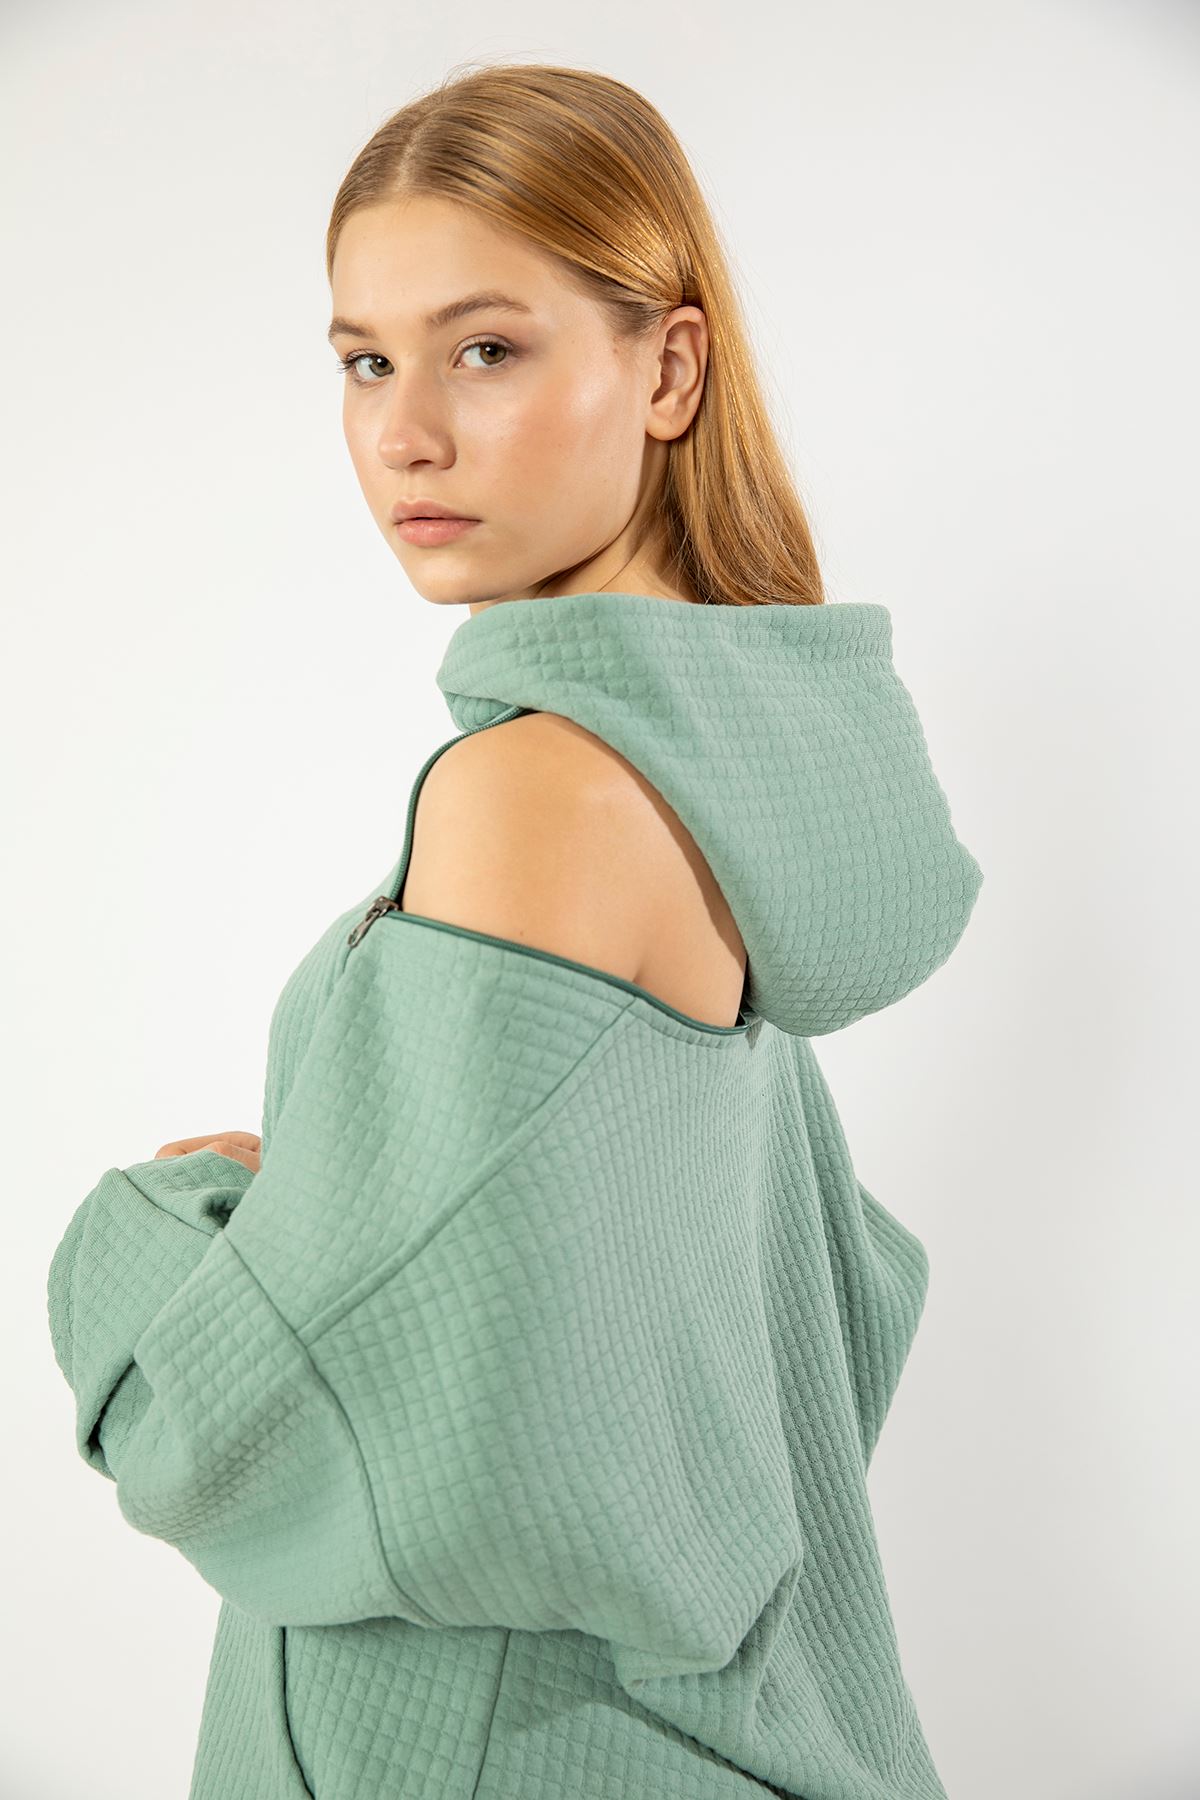 Quilted Fabric Hooded Hip Height Oversize Zip Detailed Women Sweatshirt - Mint